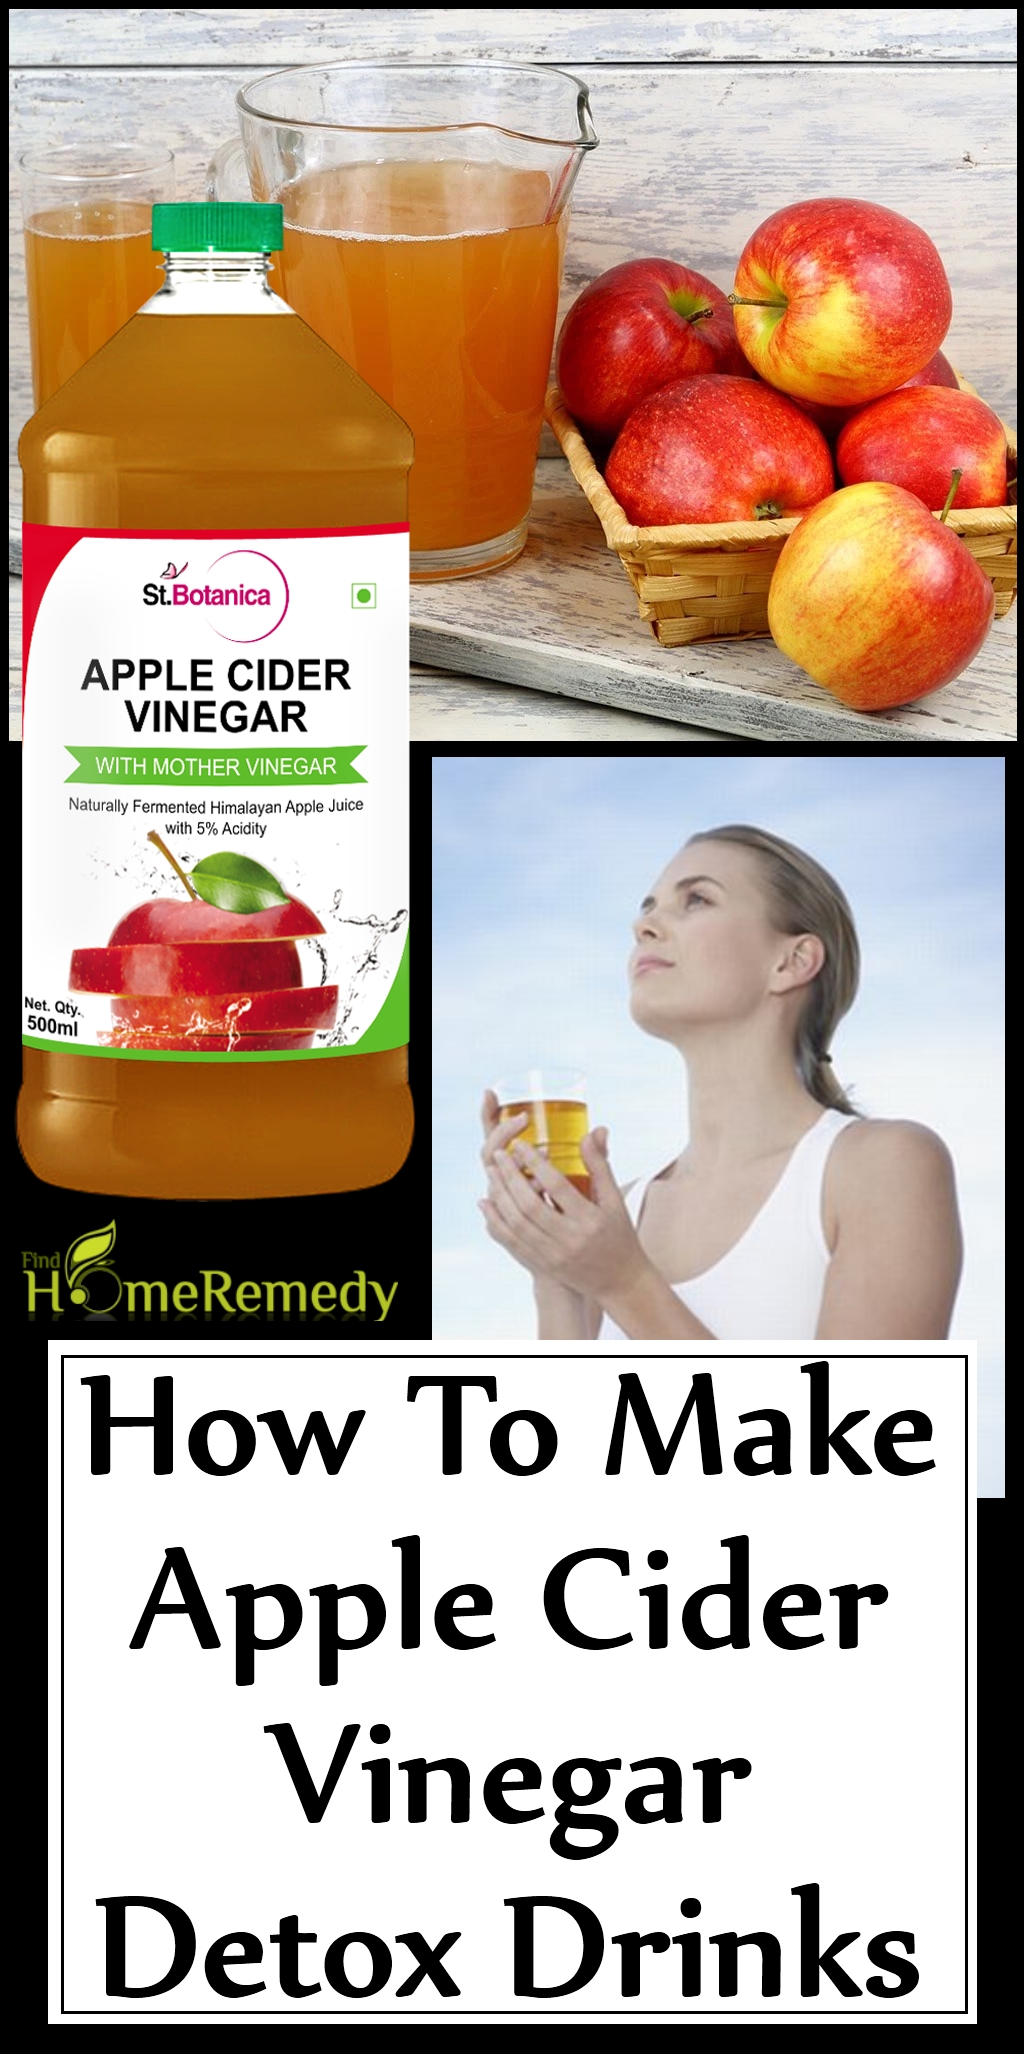 Apple Cider Vinegar Diet - Pictures